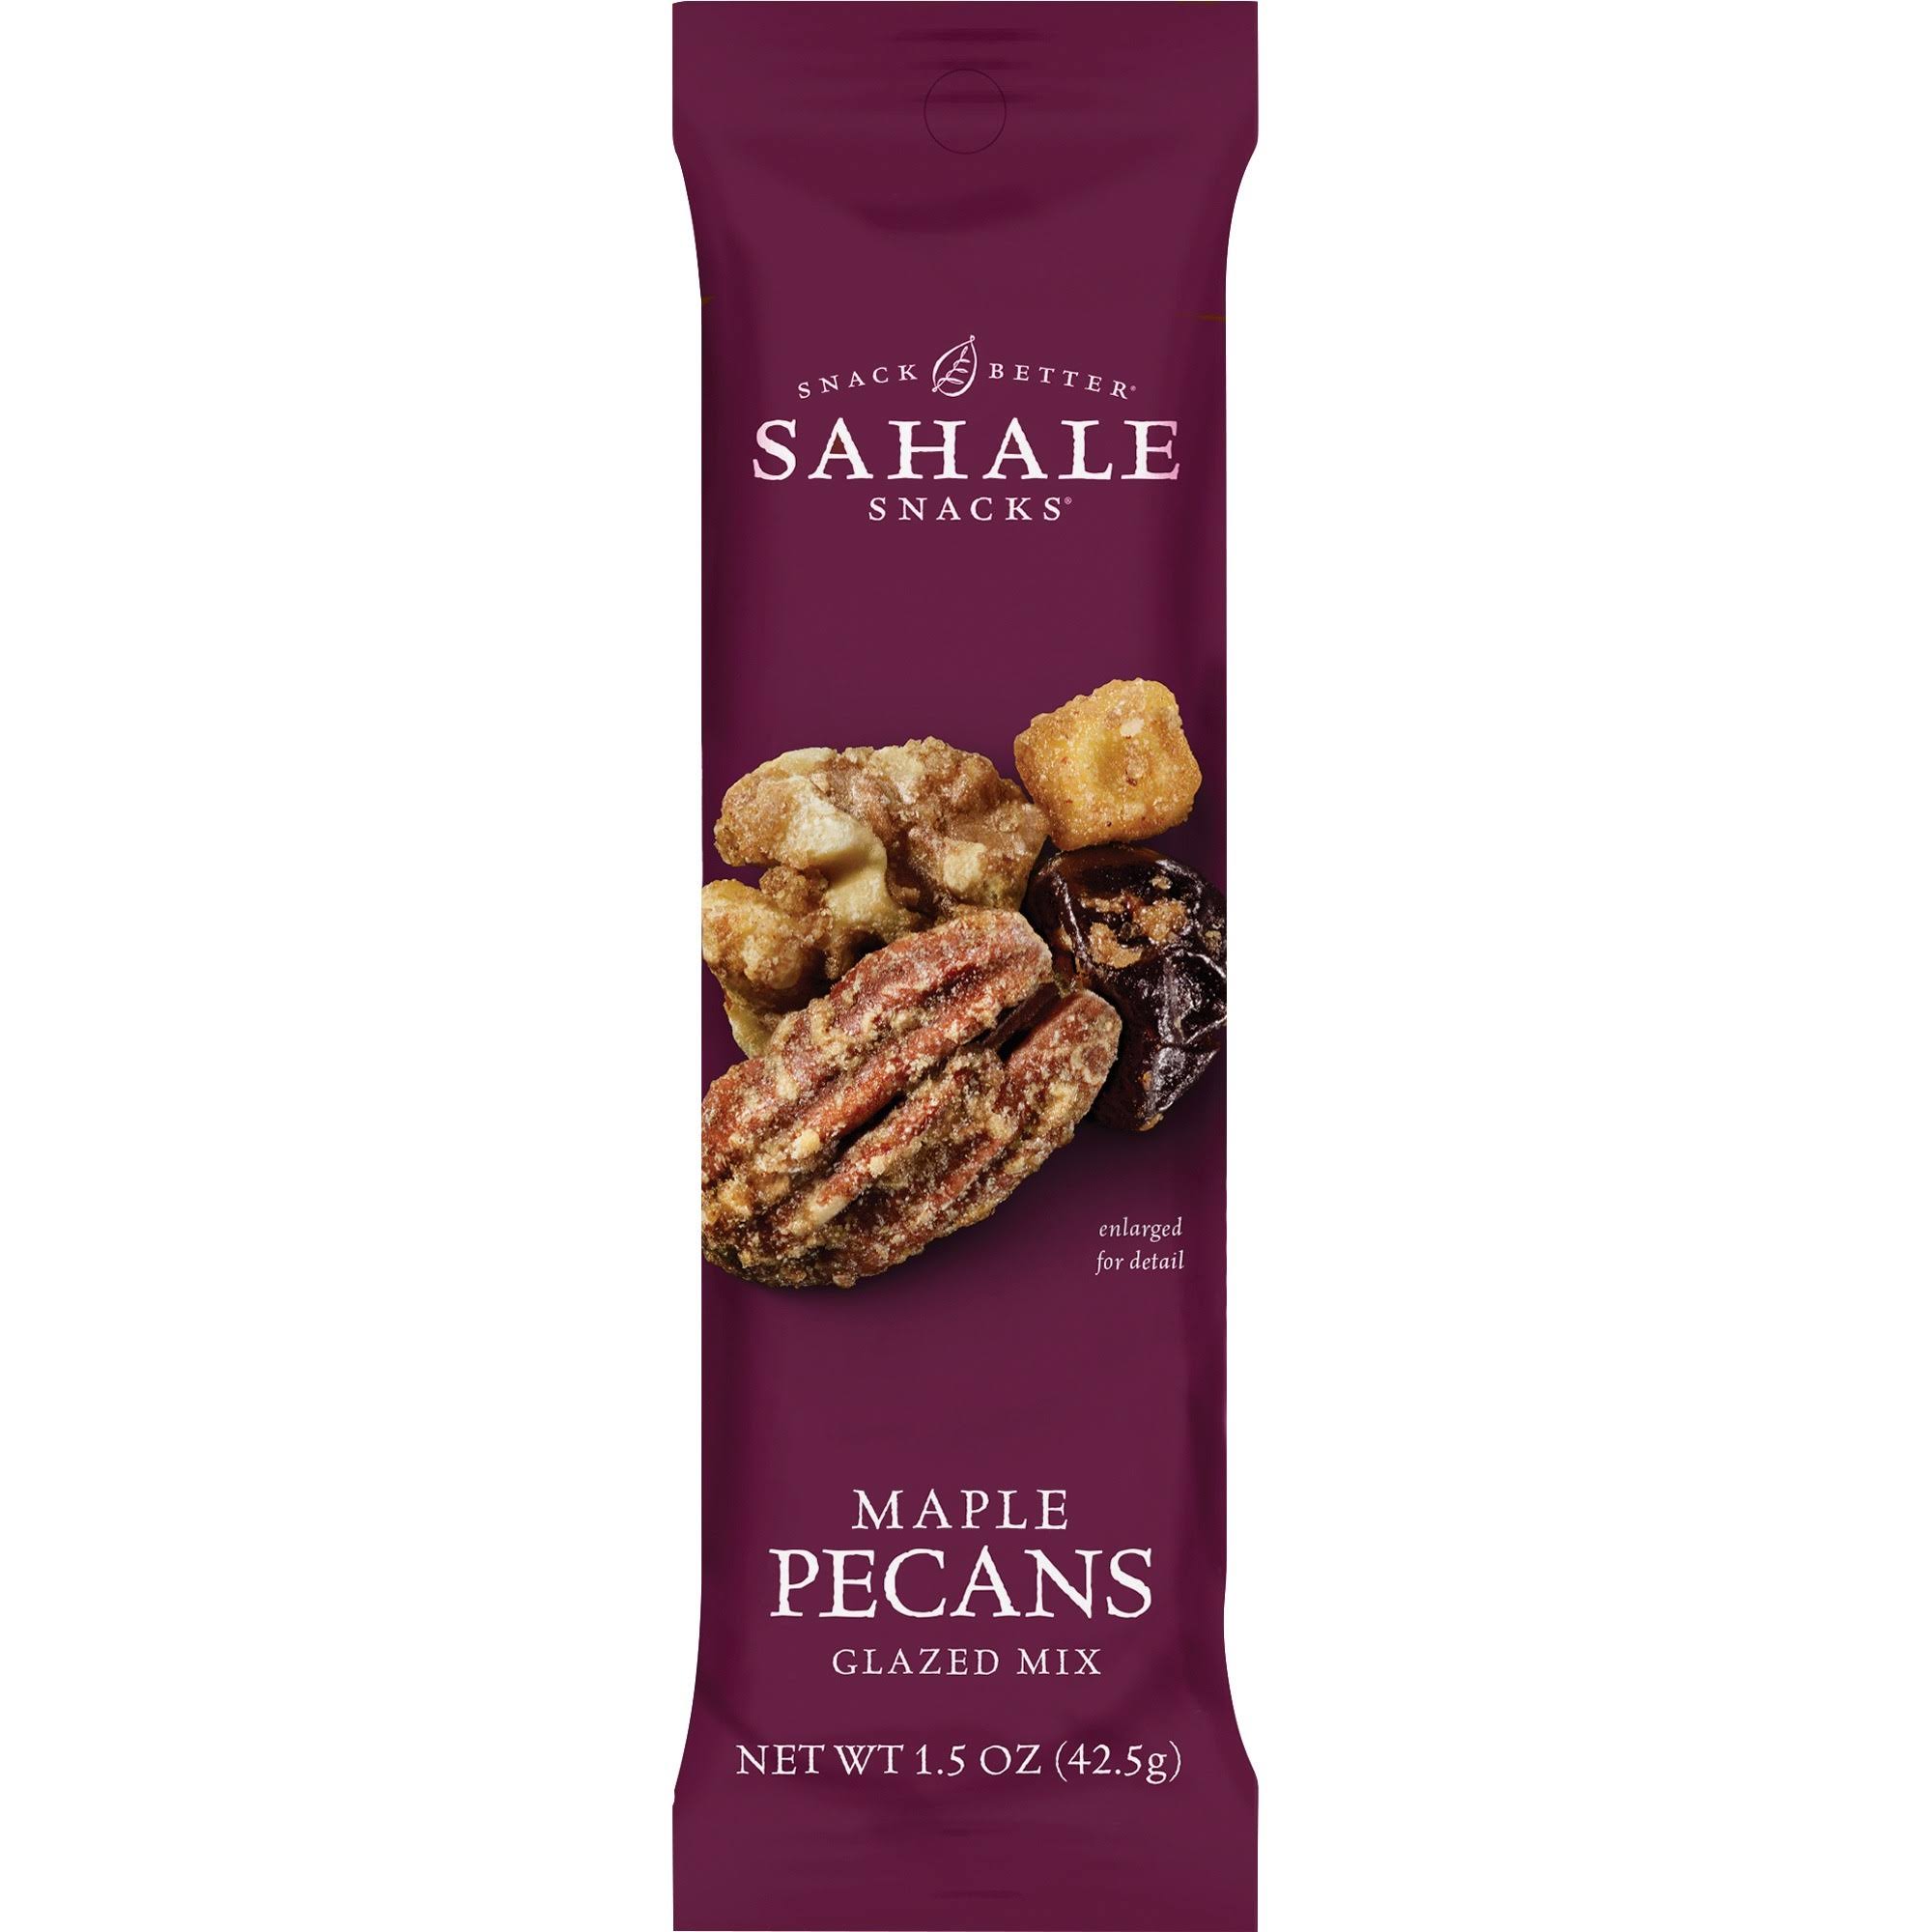 Sahale Glazed Mix, Maple Pecans - 1.5 oz